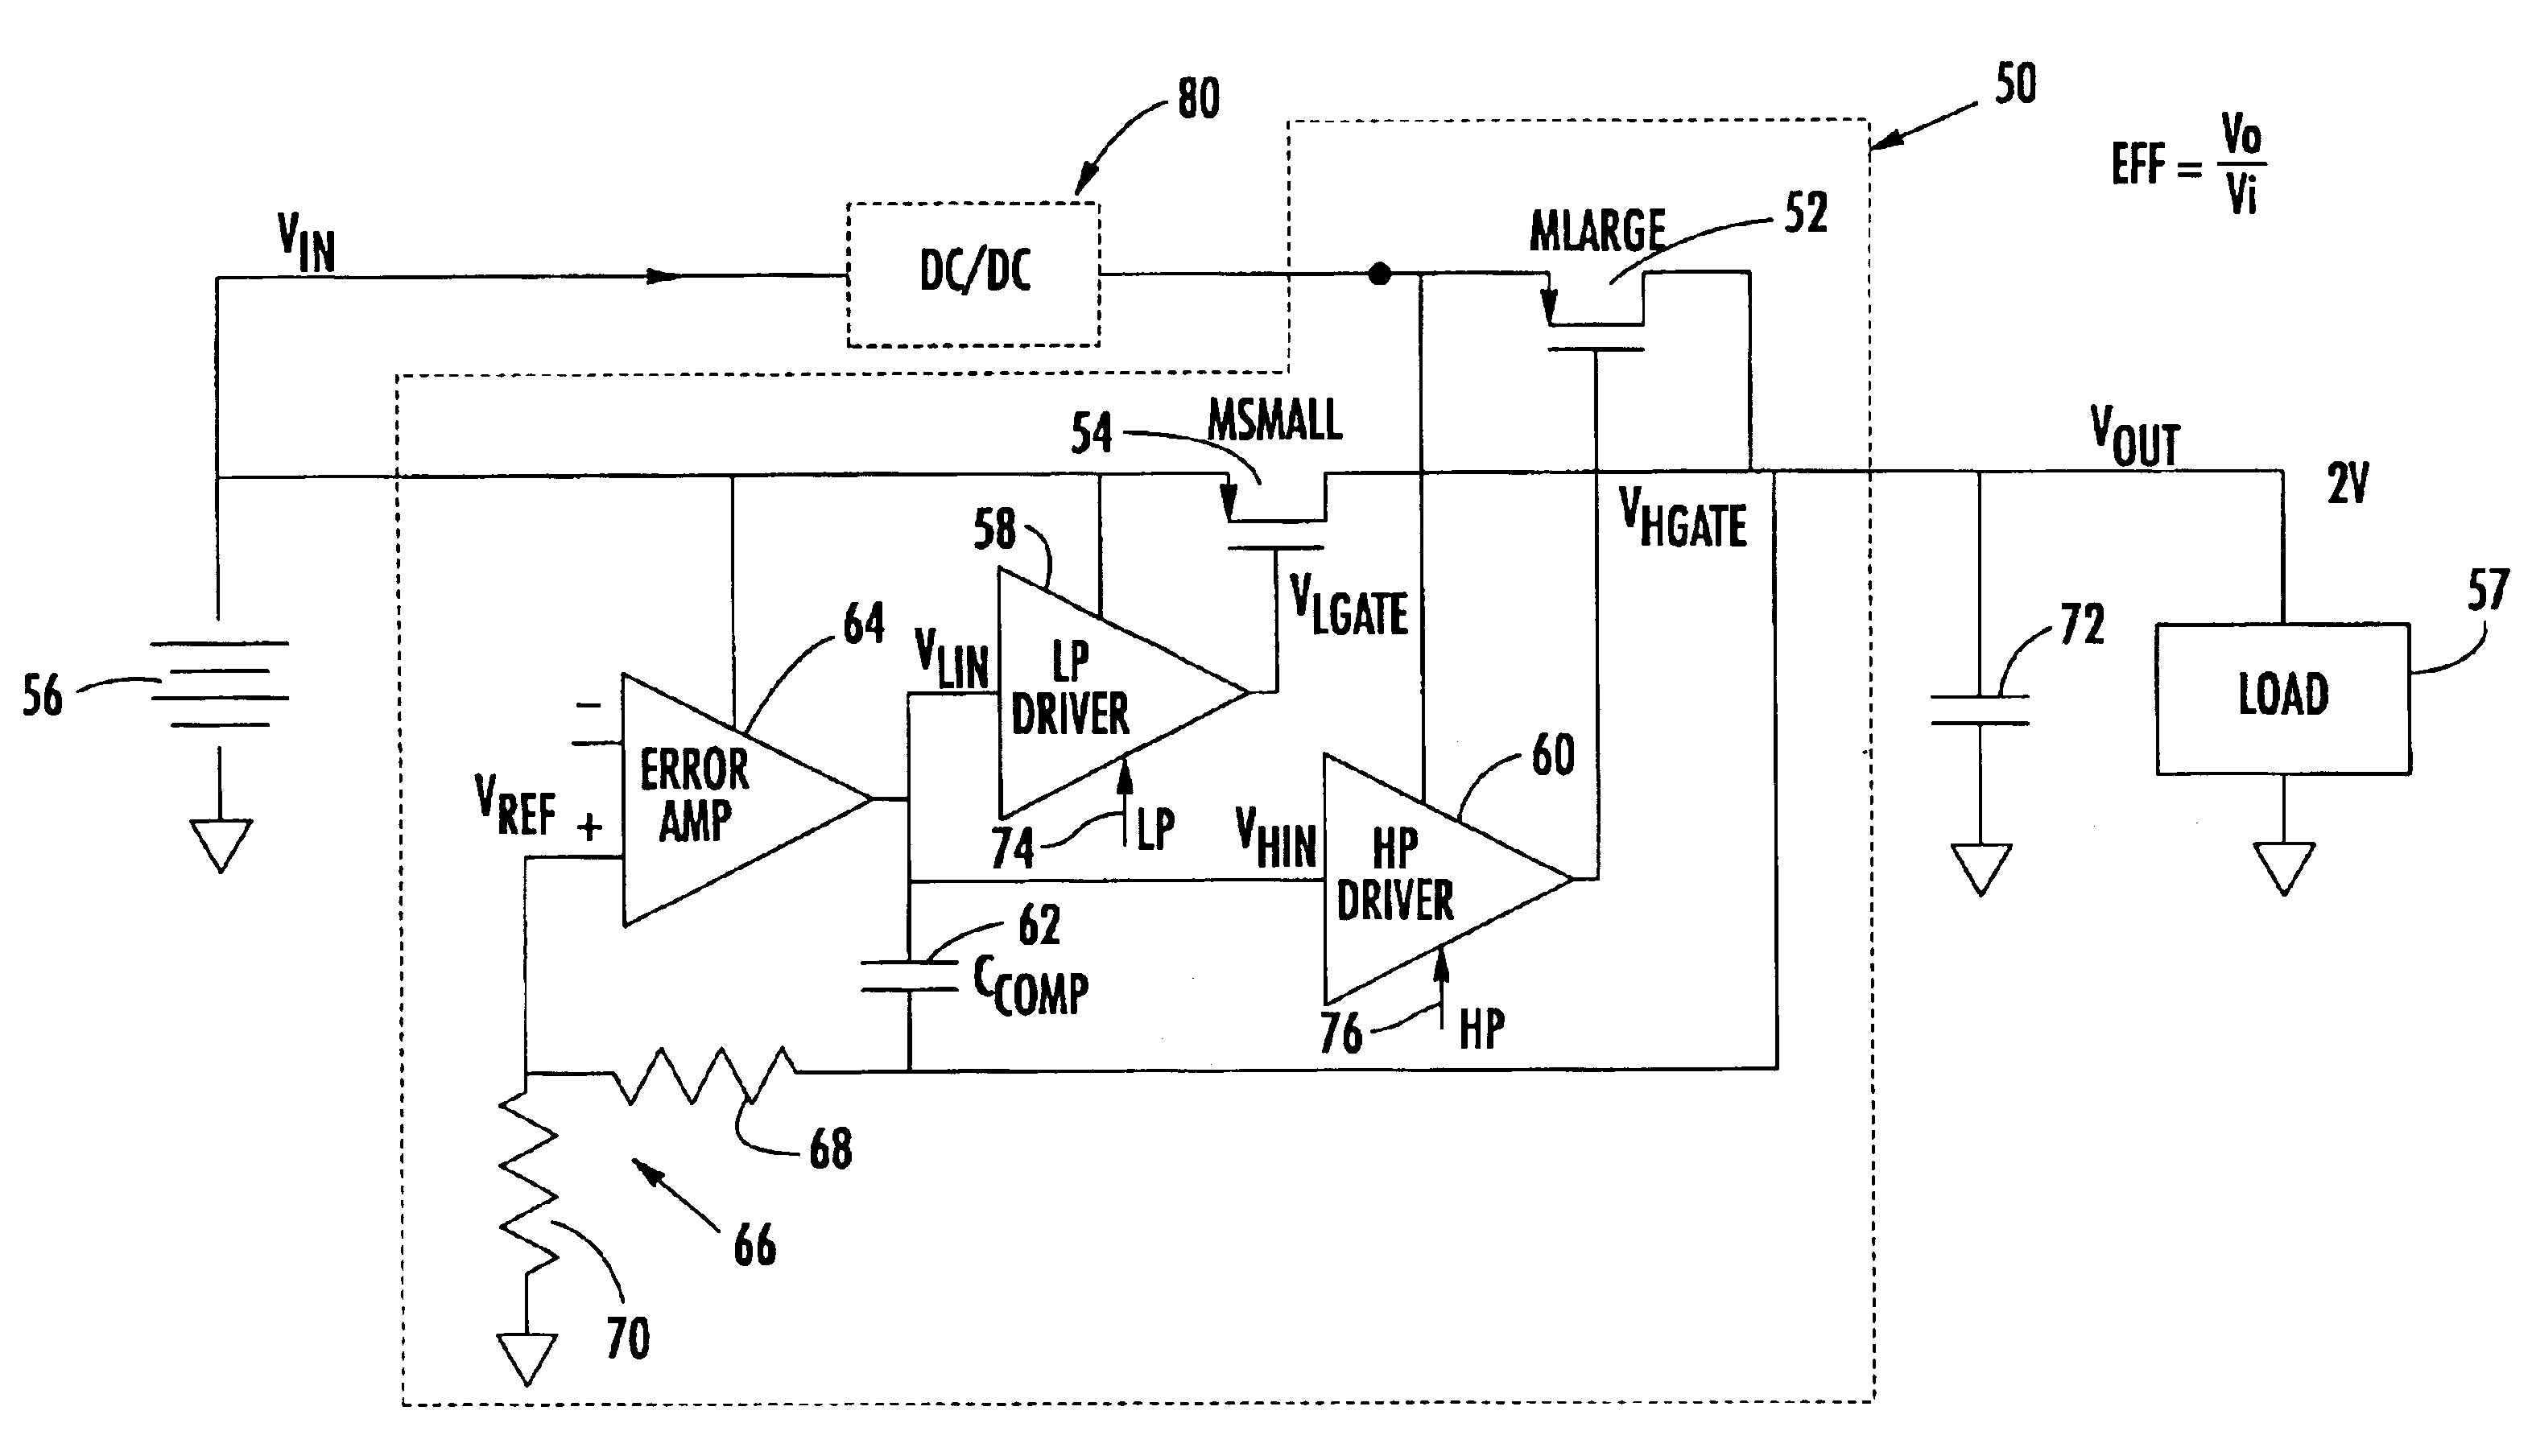 Multimode voltage regulator